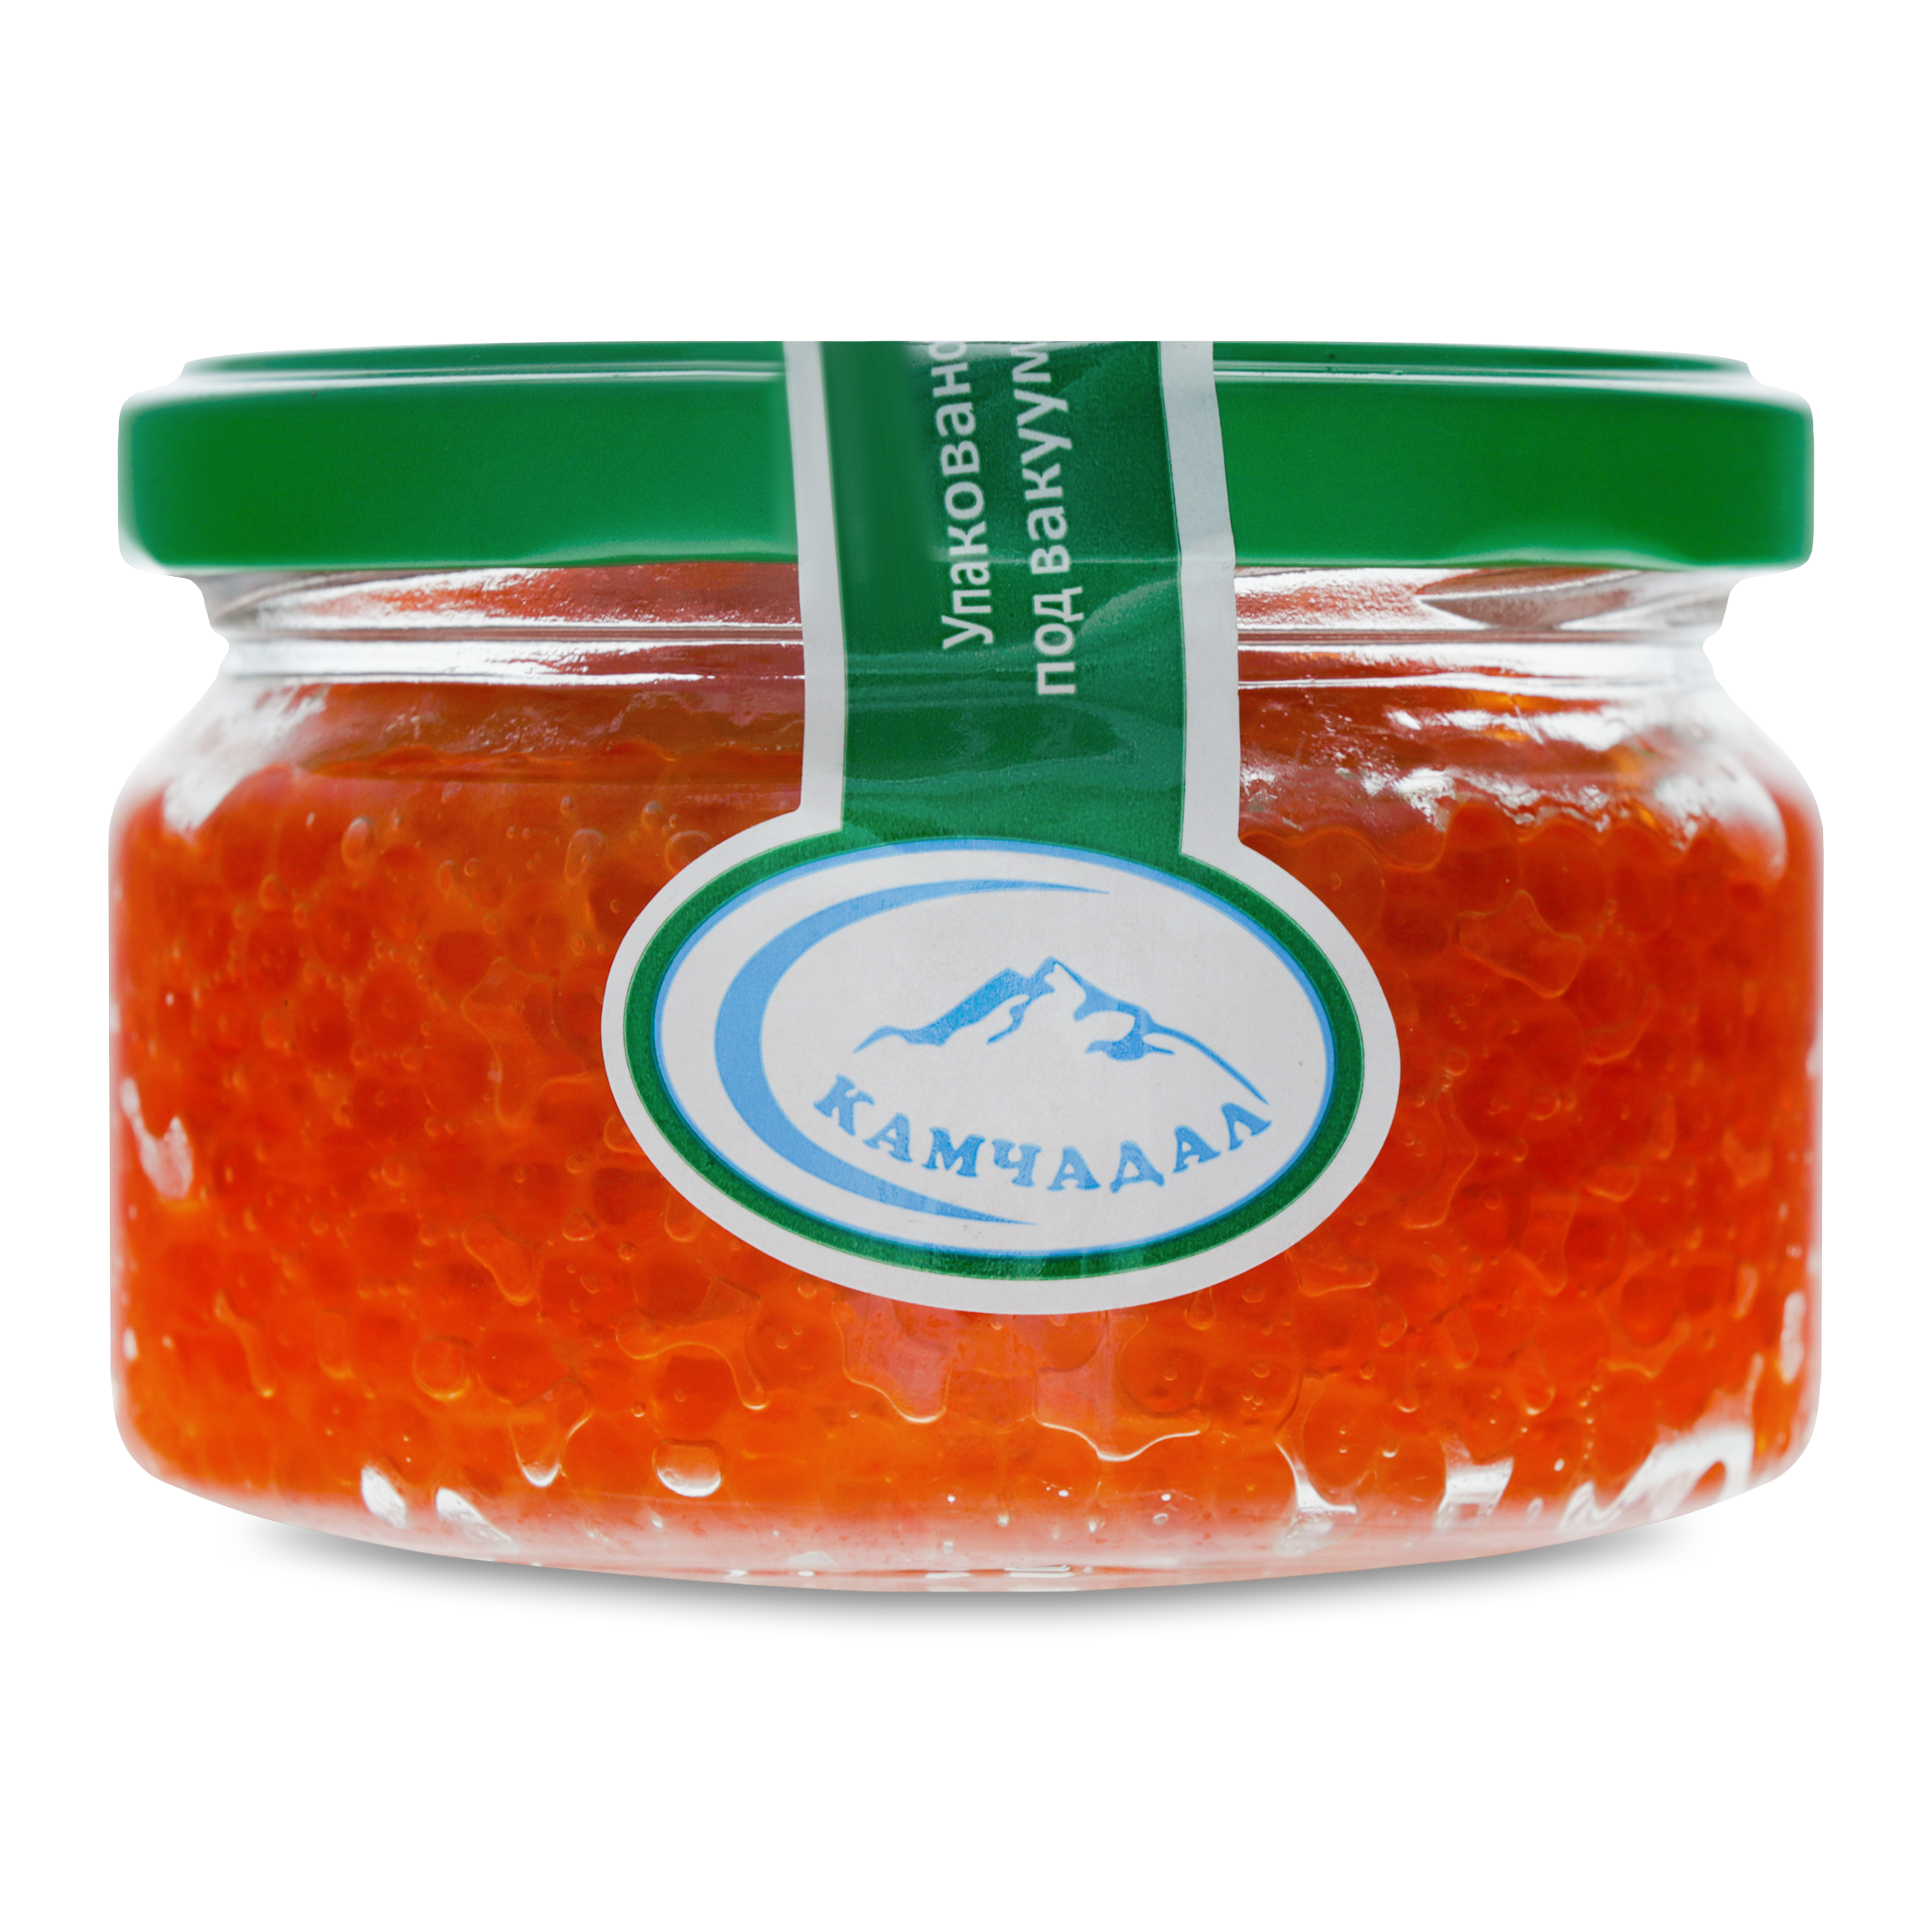 Kamchadal salmon red grain-growing caviar 185g